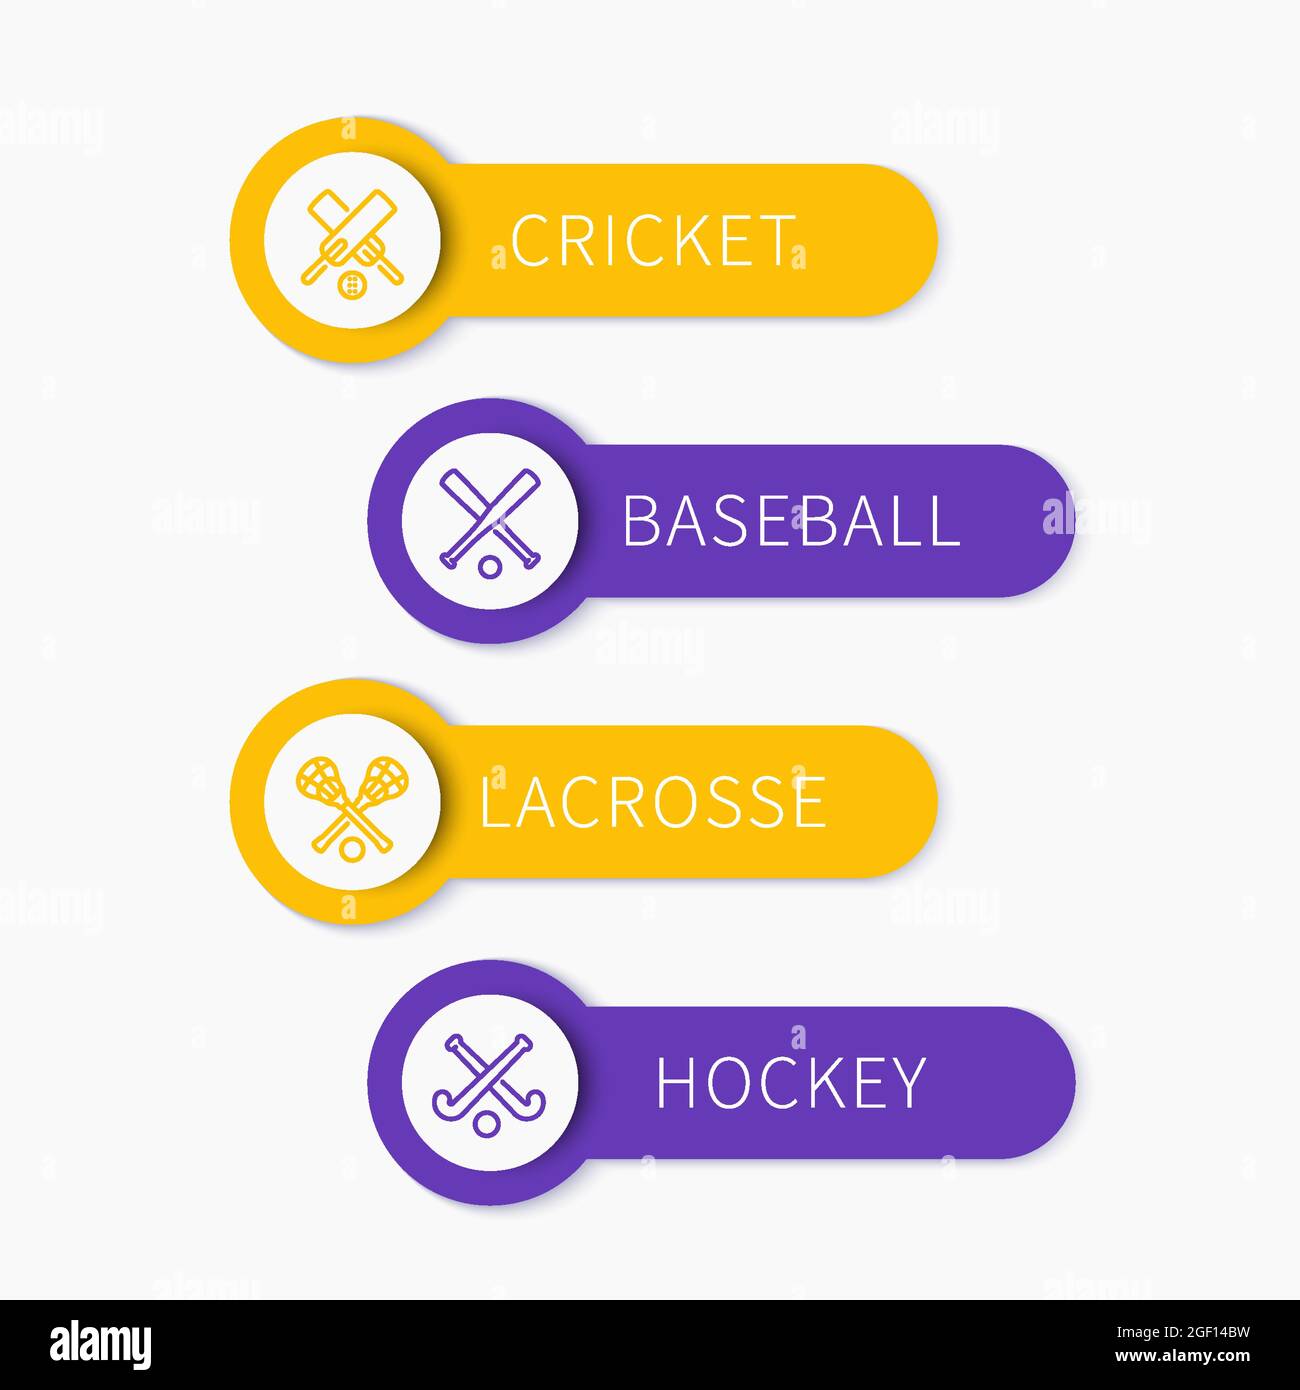 Cricket, baseball, lacrosse, team sports banners  Stock Vector